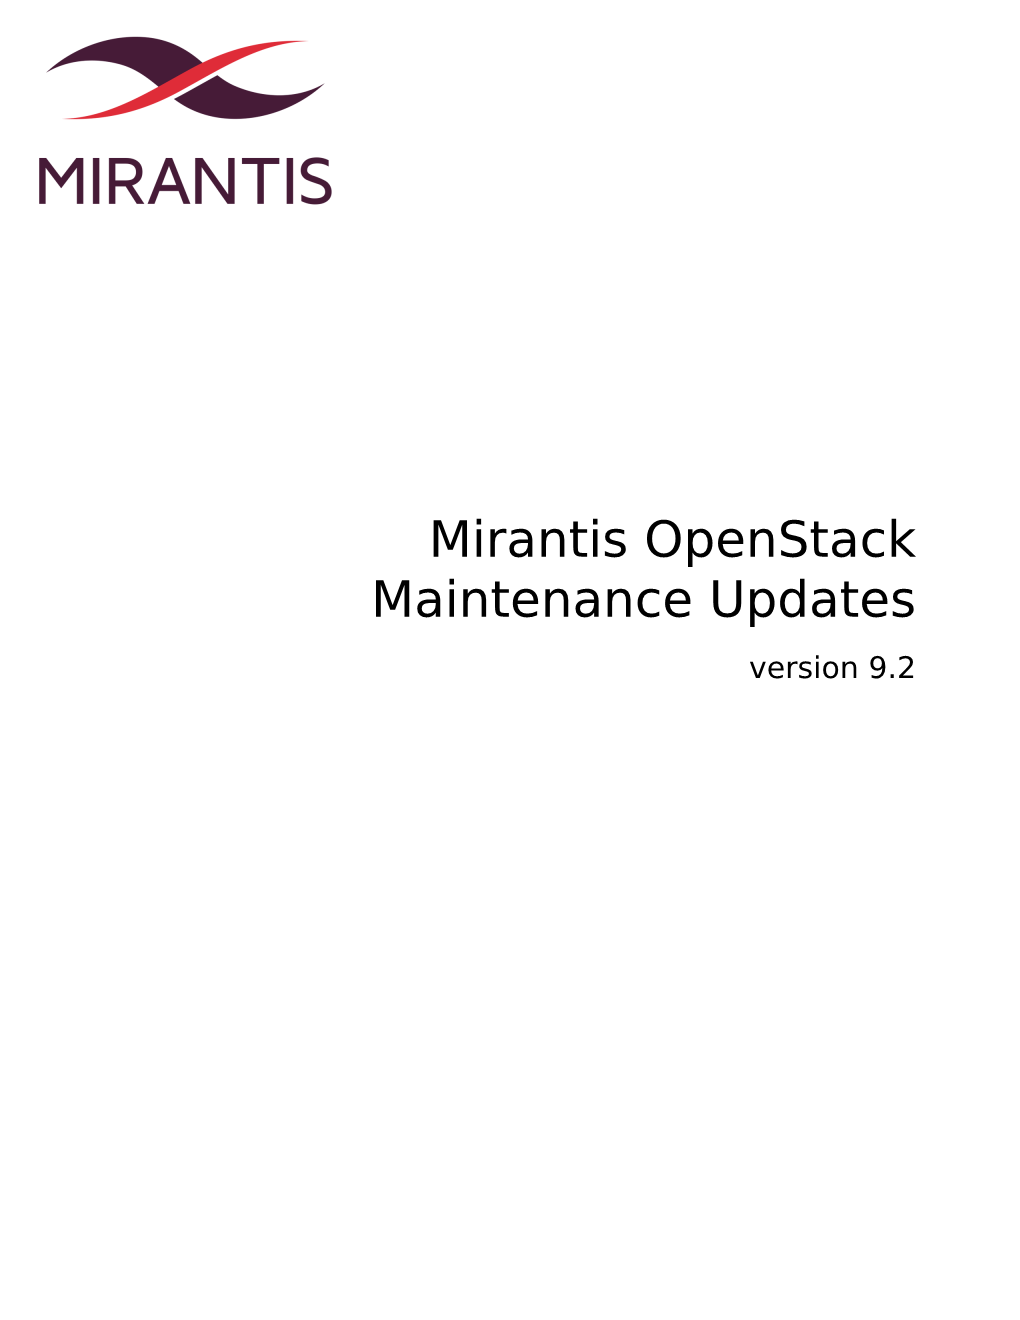 Mirantis Openstack Maintenance Updates Version 9.2 Mirantis Openstack Maintenance Updates 9.2